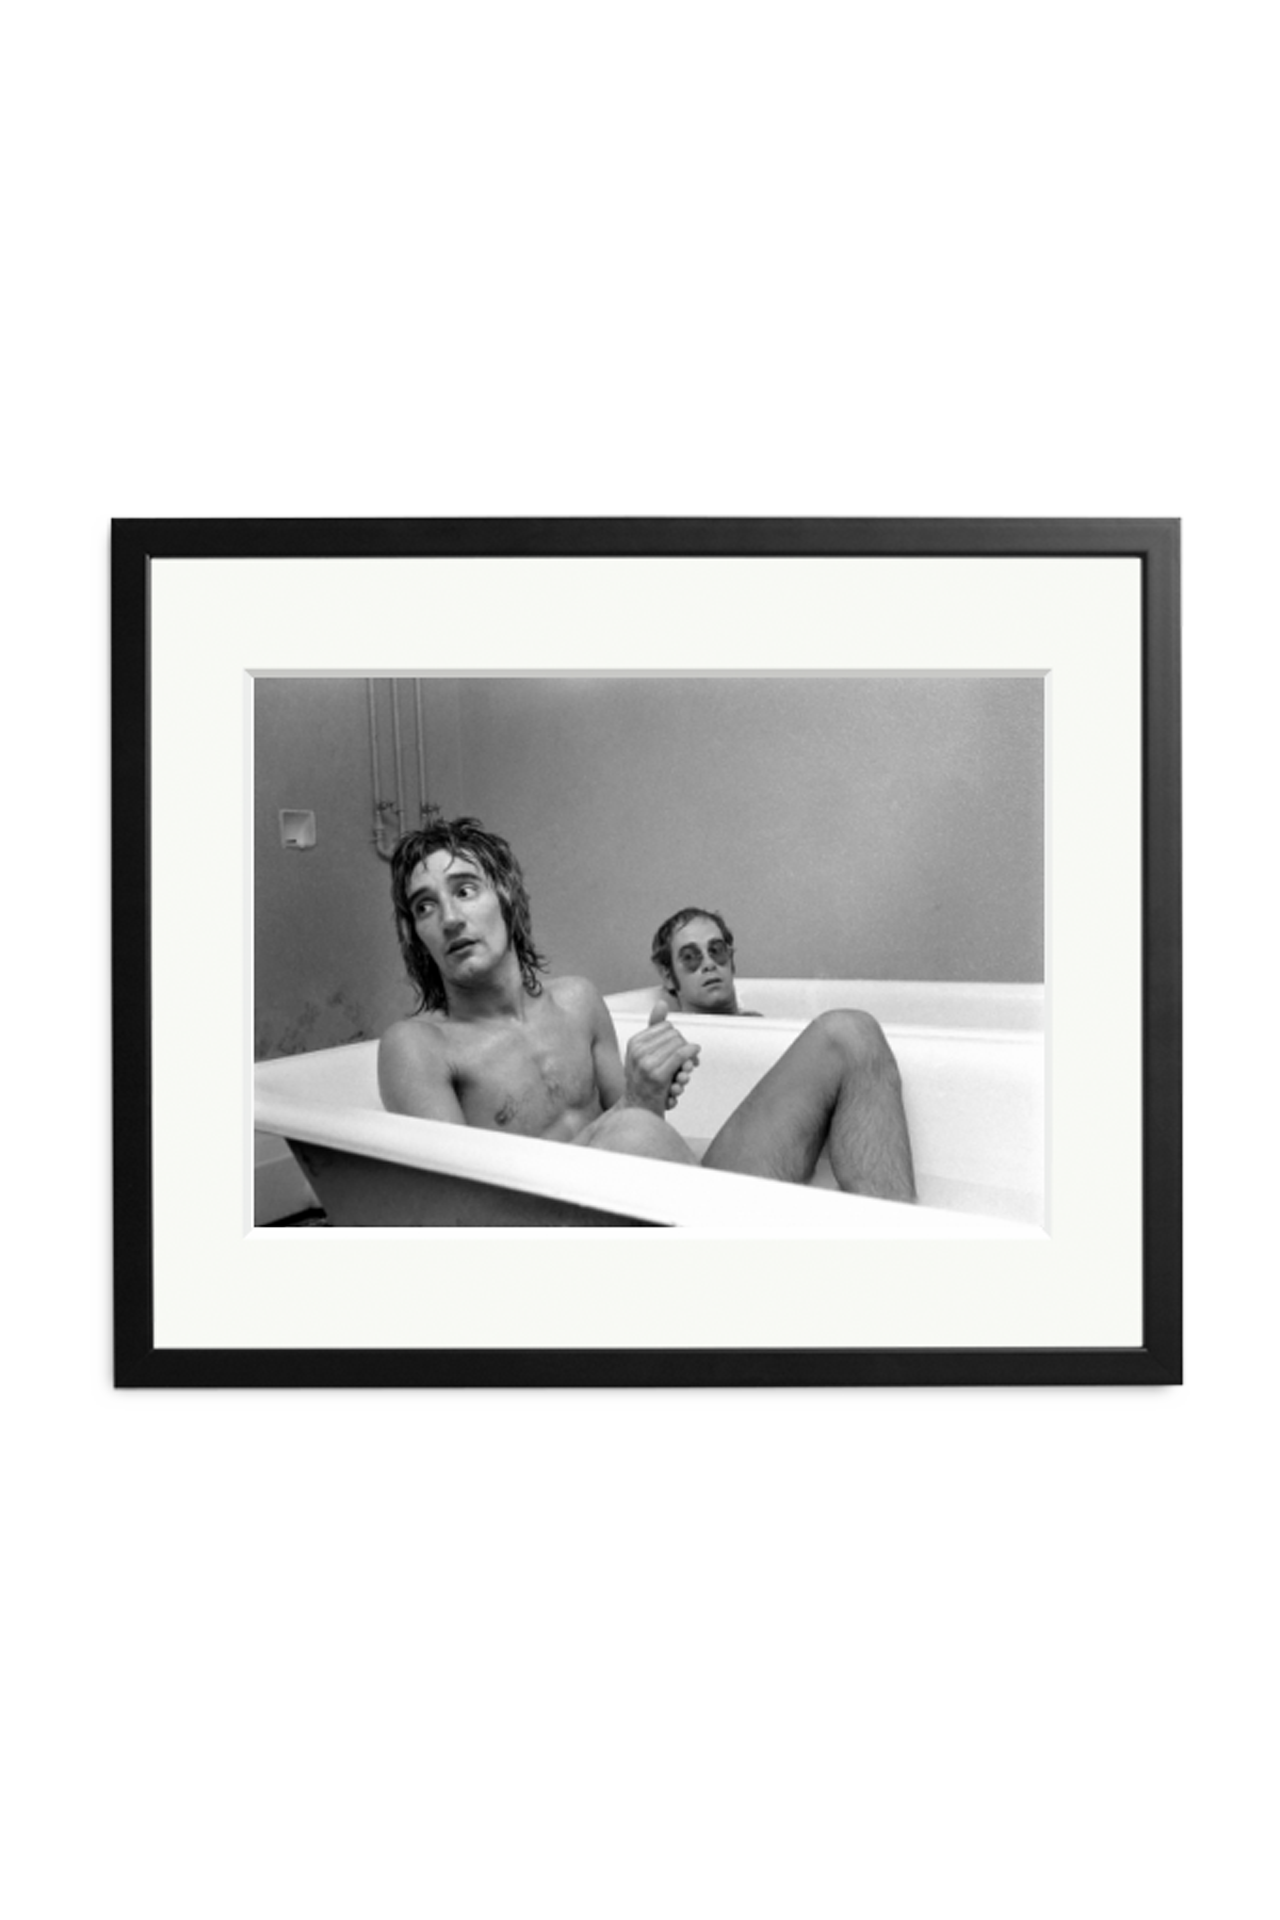 Elton and Rod Having Bath (6639623307379)